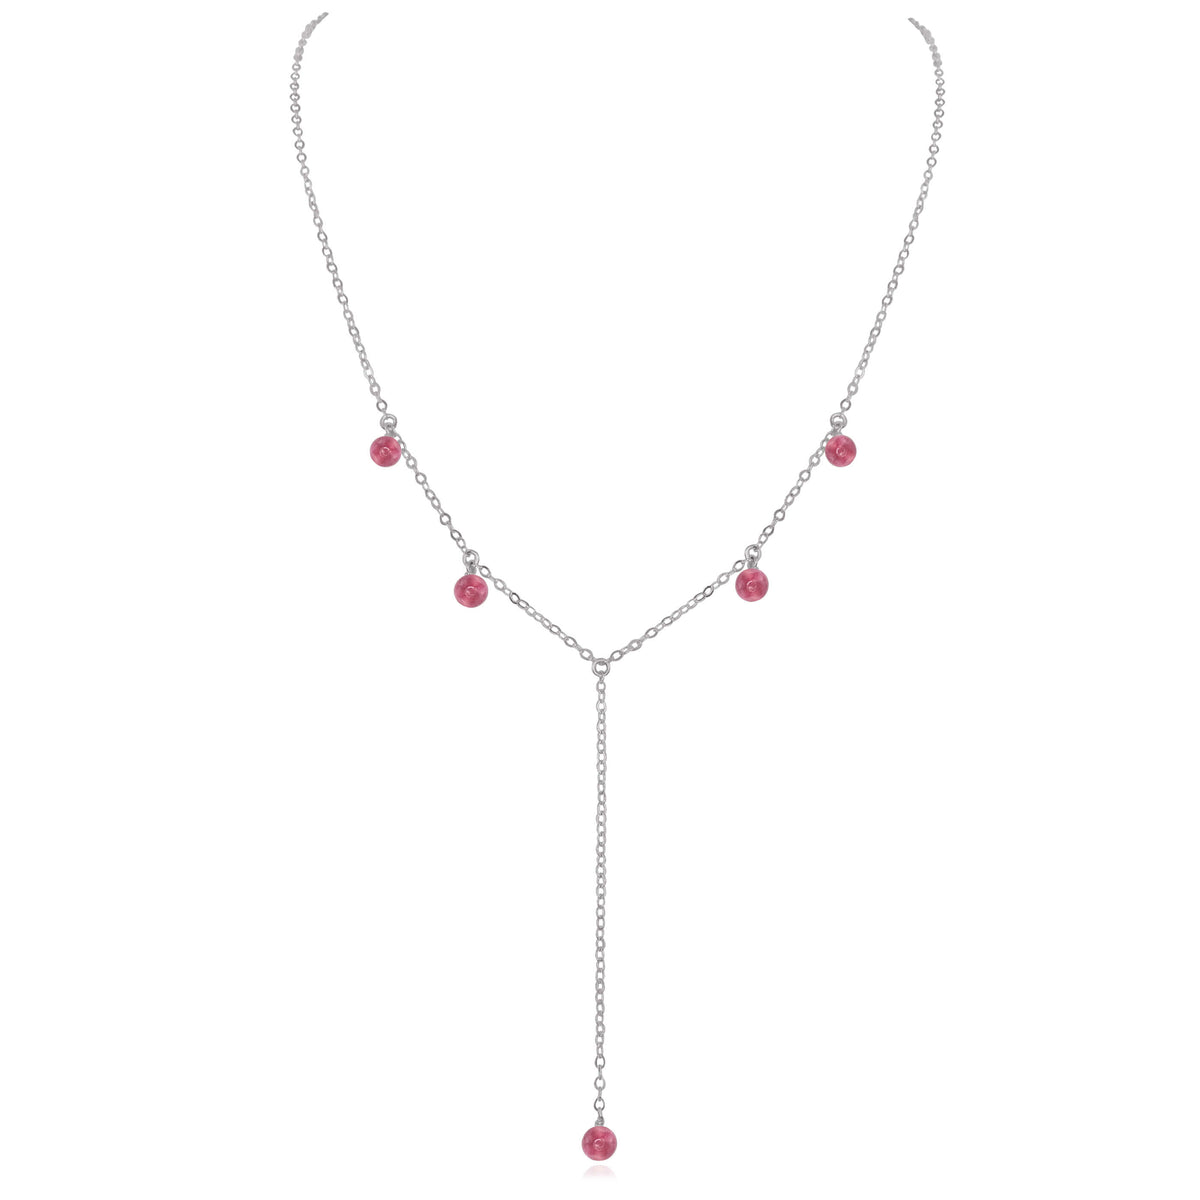 Boho Y Necklace - Pink Tourmaline - Stainless Steel - Luna Tide Handmade Jewellery